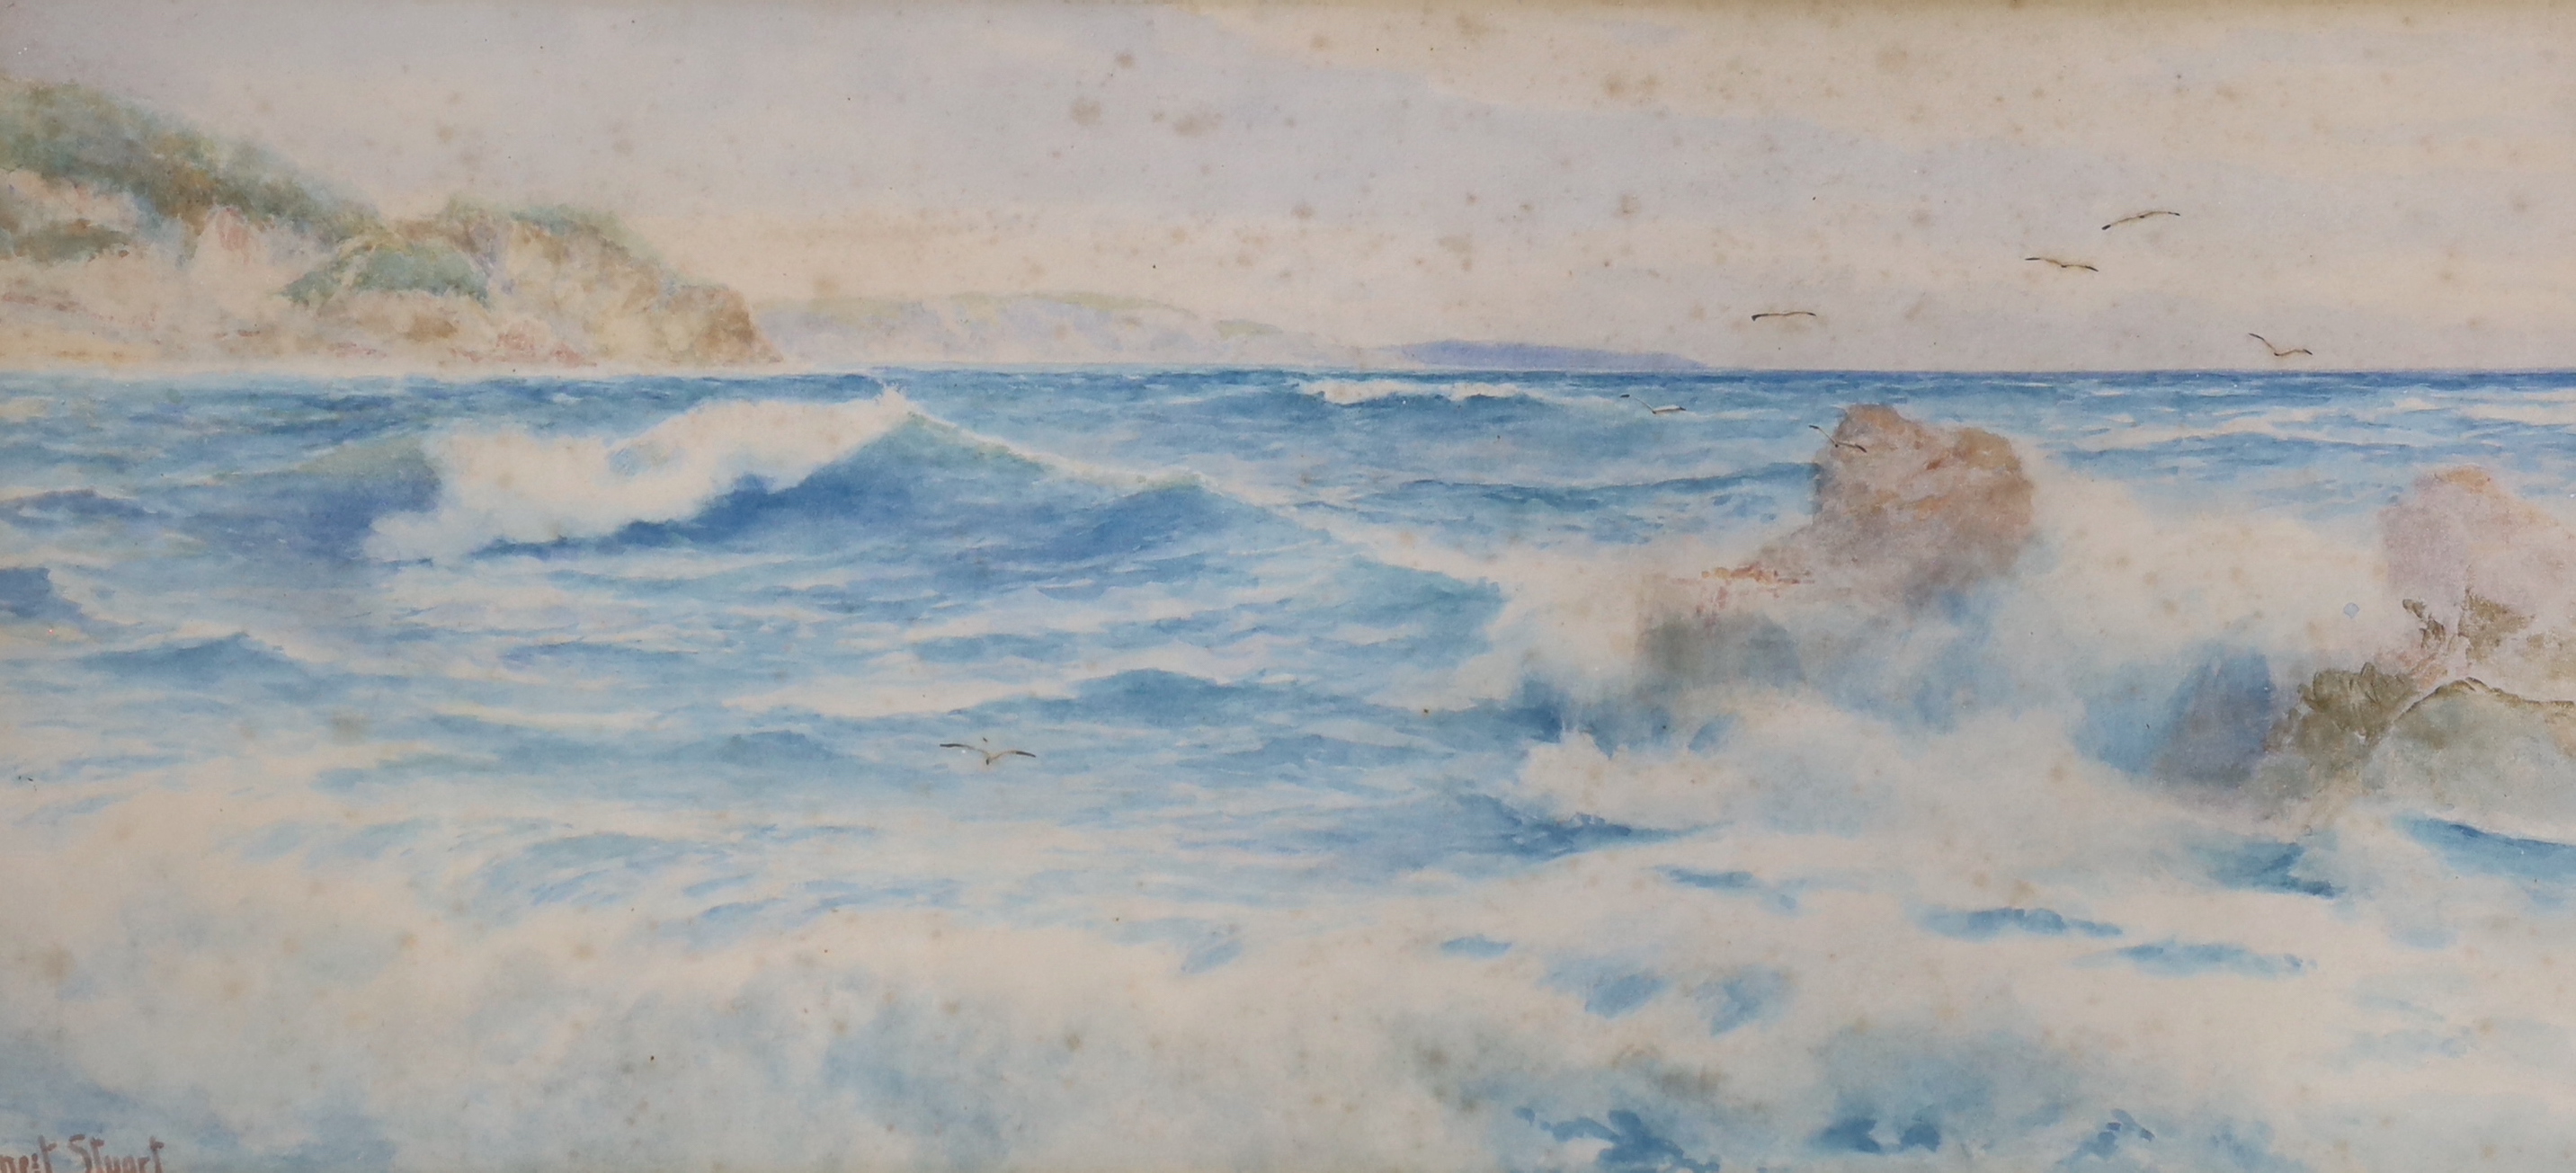 Ernest Stuart (1889-1915), watercolour, Coastal scene, signed, 23 x 51cm